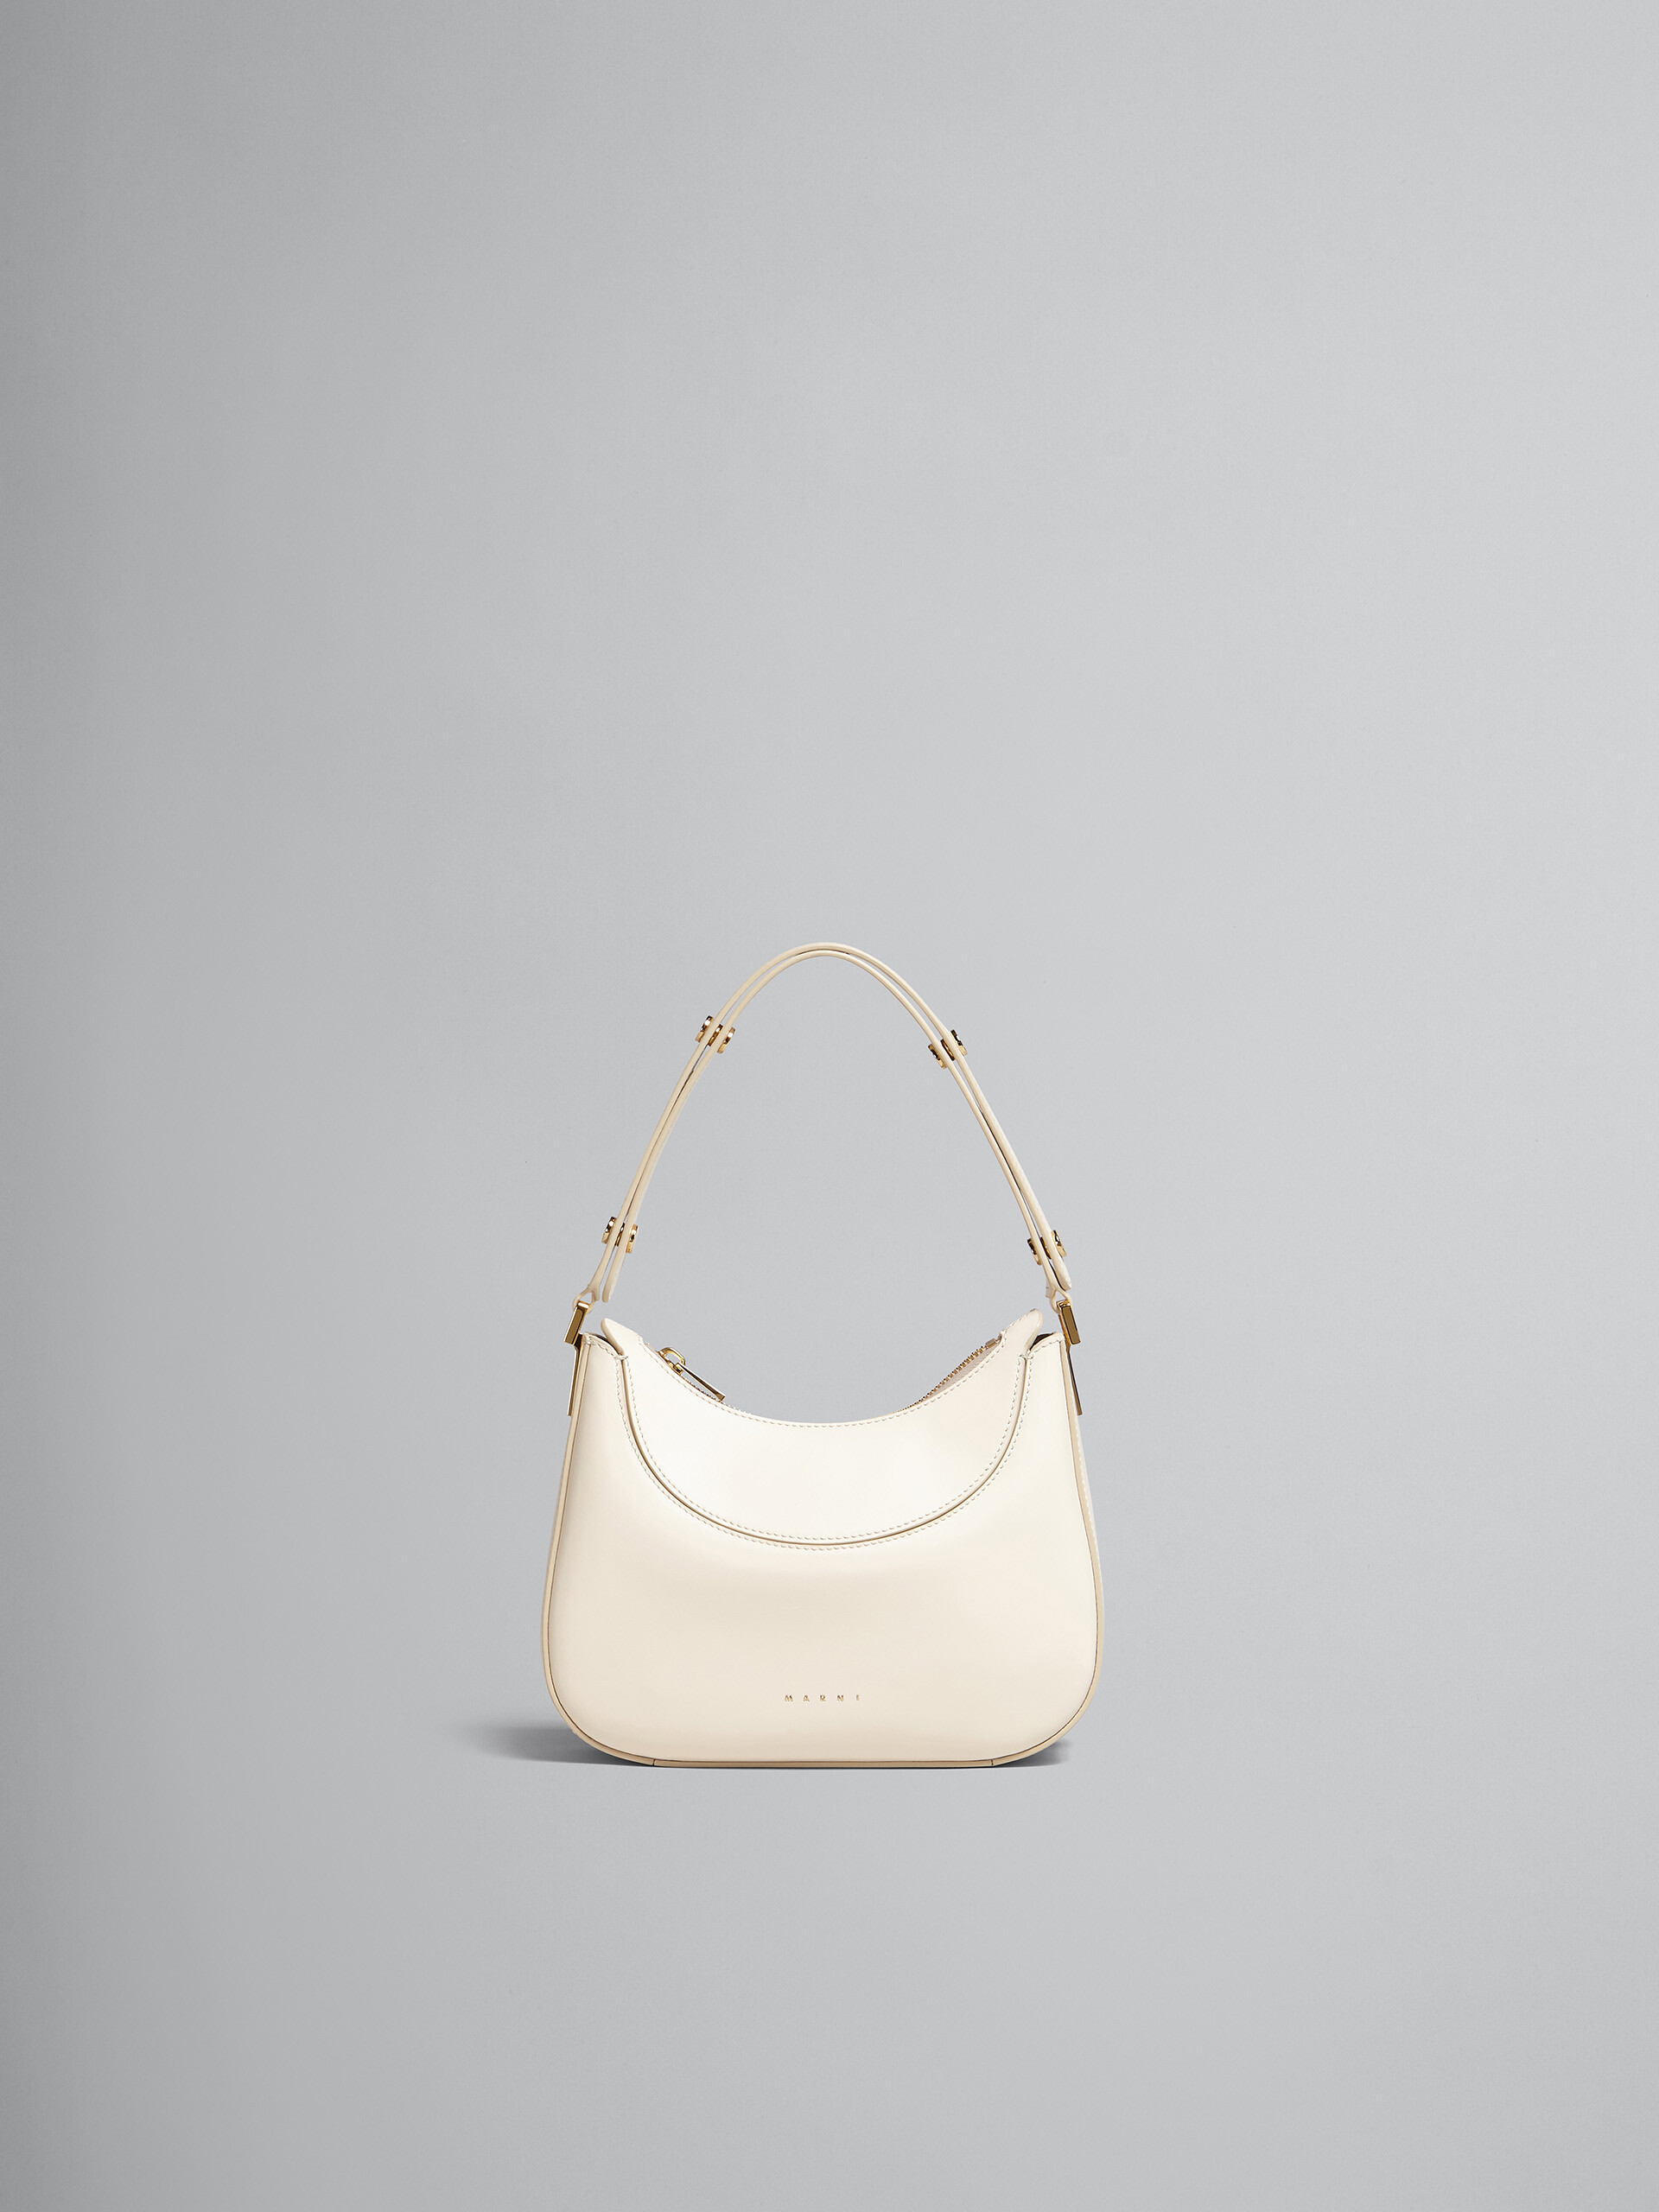 Milano mini bag in white leather - Handbags - Image 1